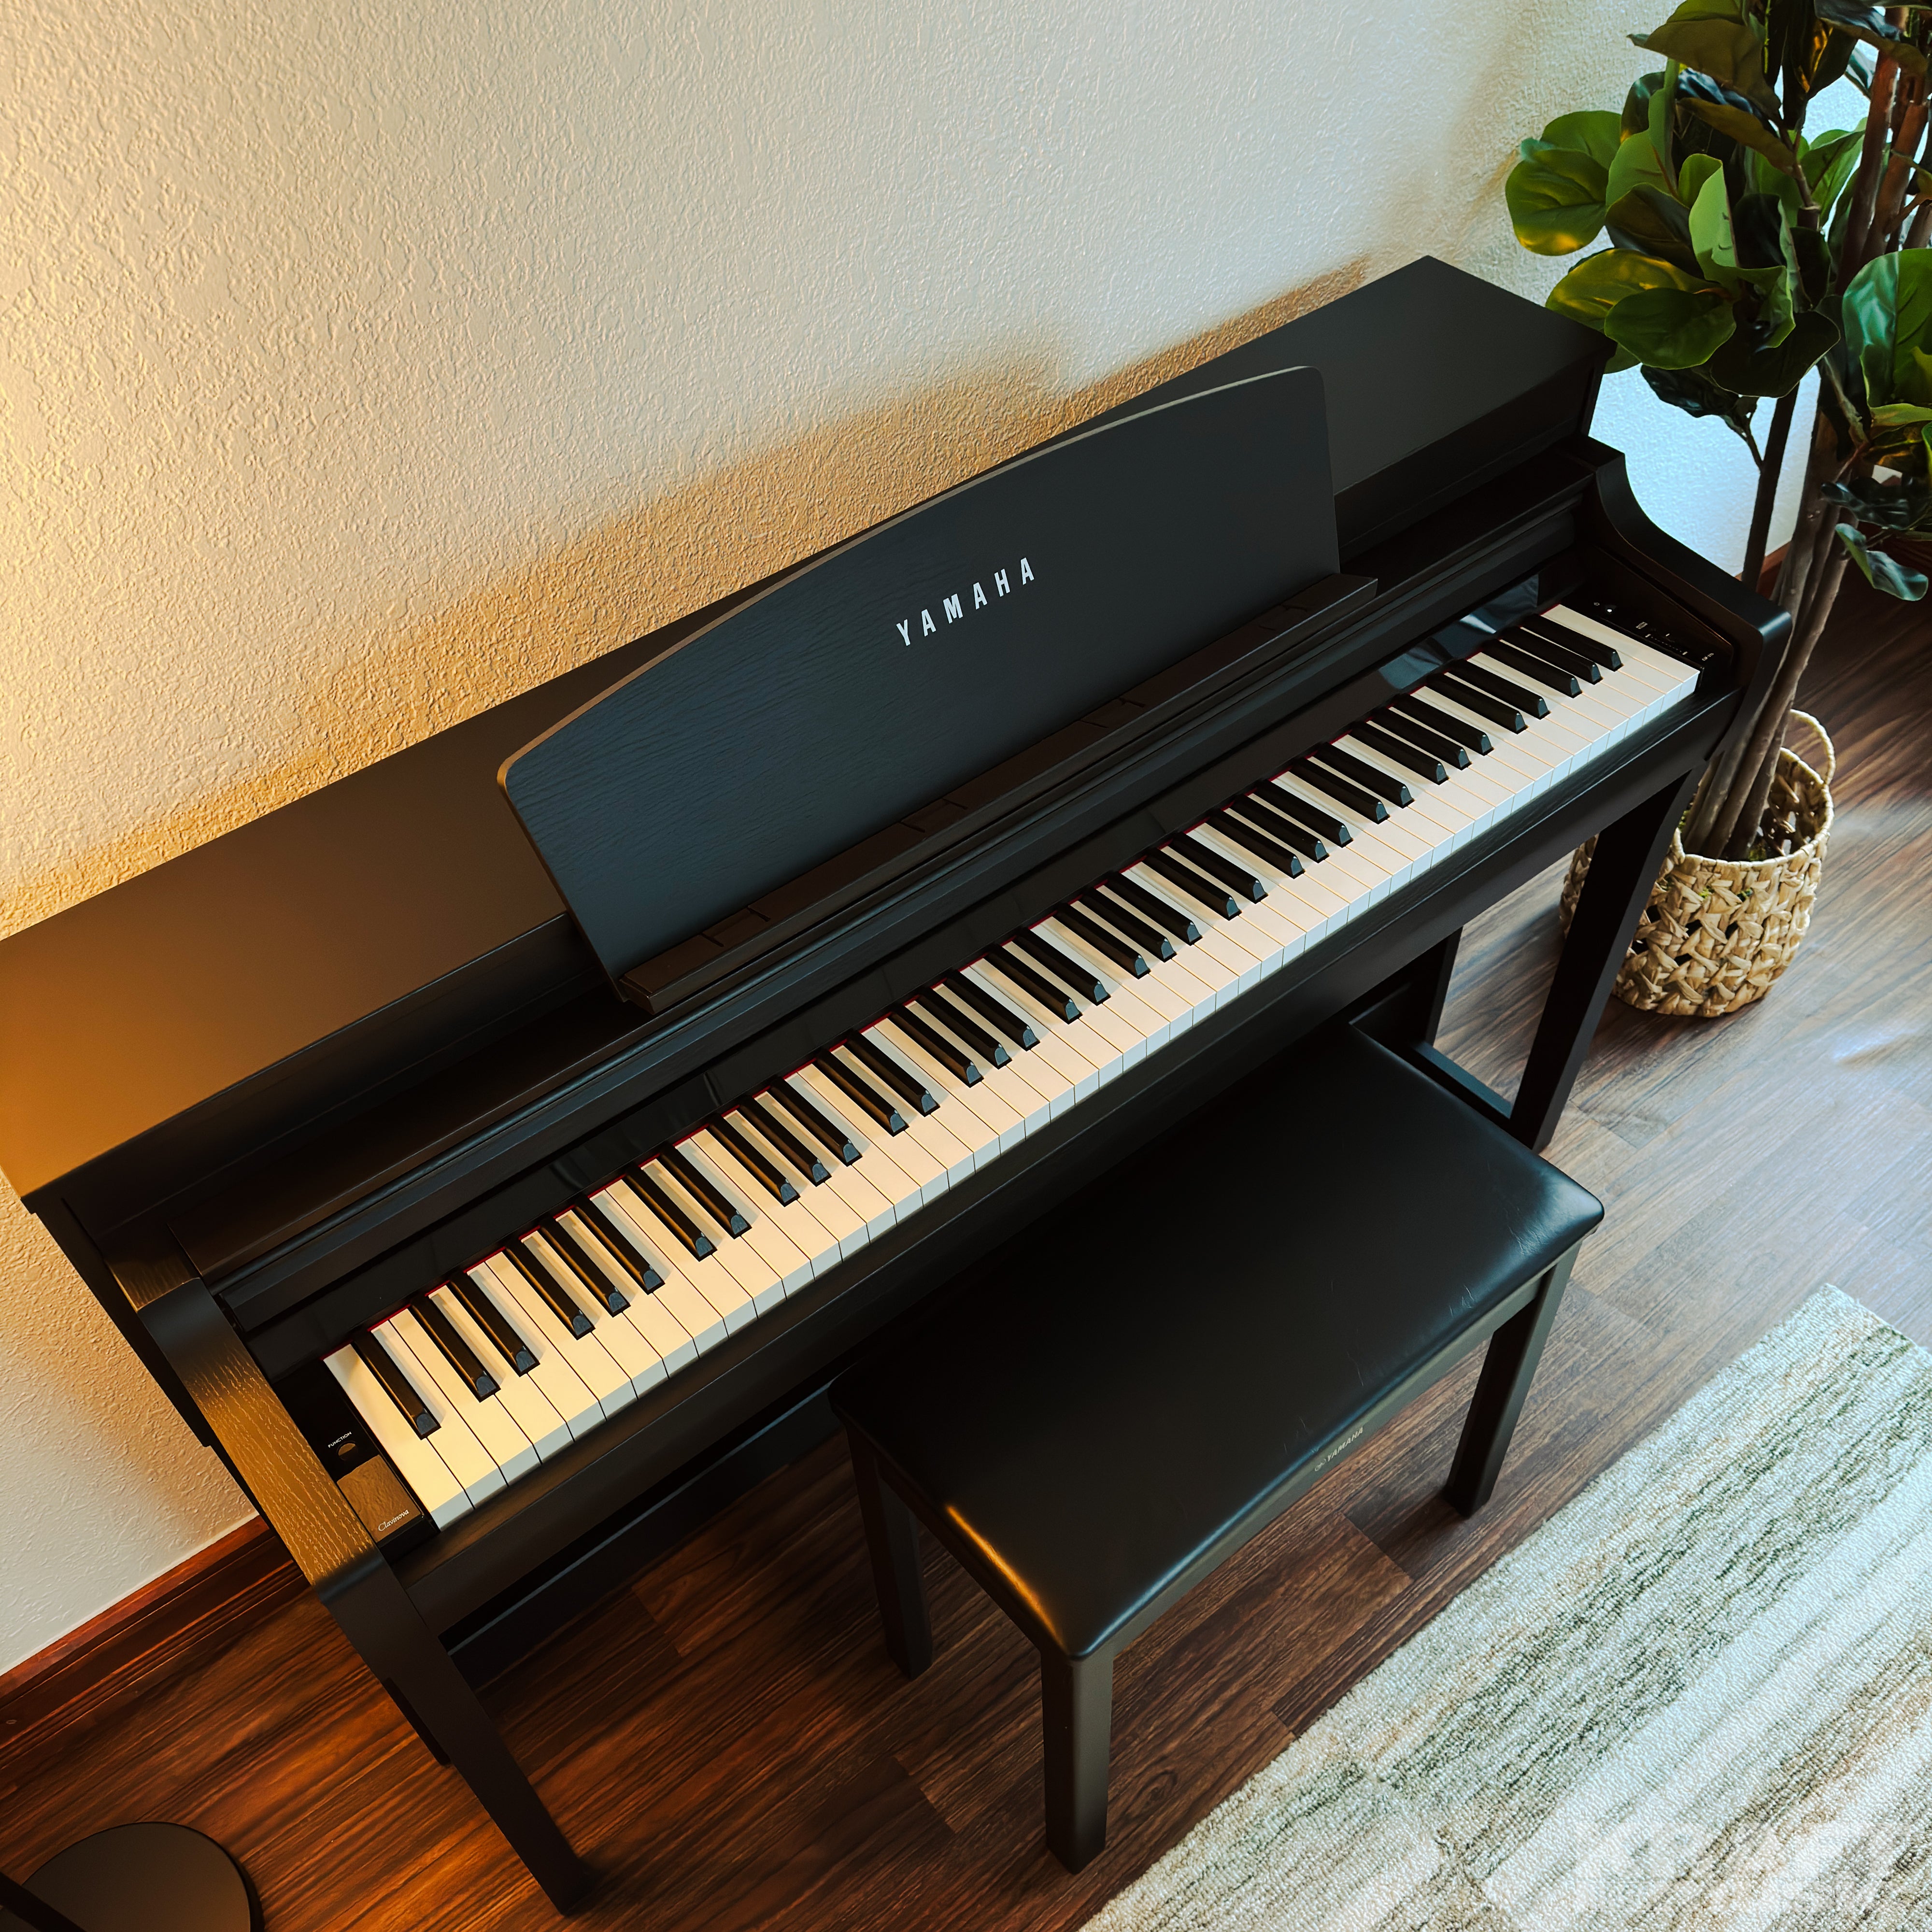 Yamaha Clavinova CSP-275 Digital Piano - Black Walnut - in a stylish living room top view